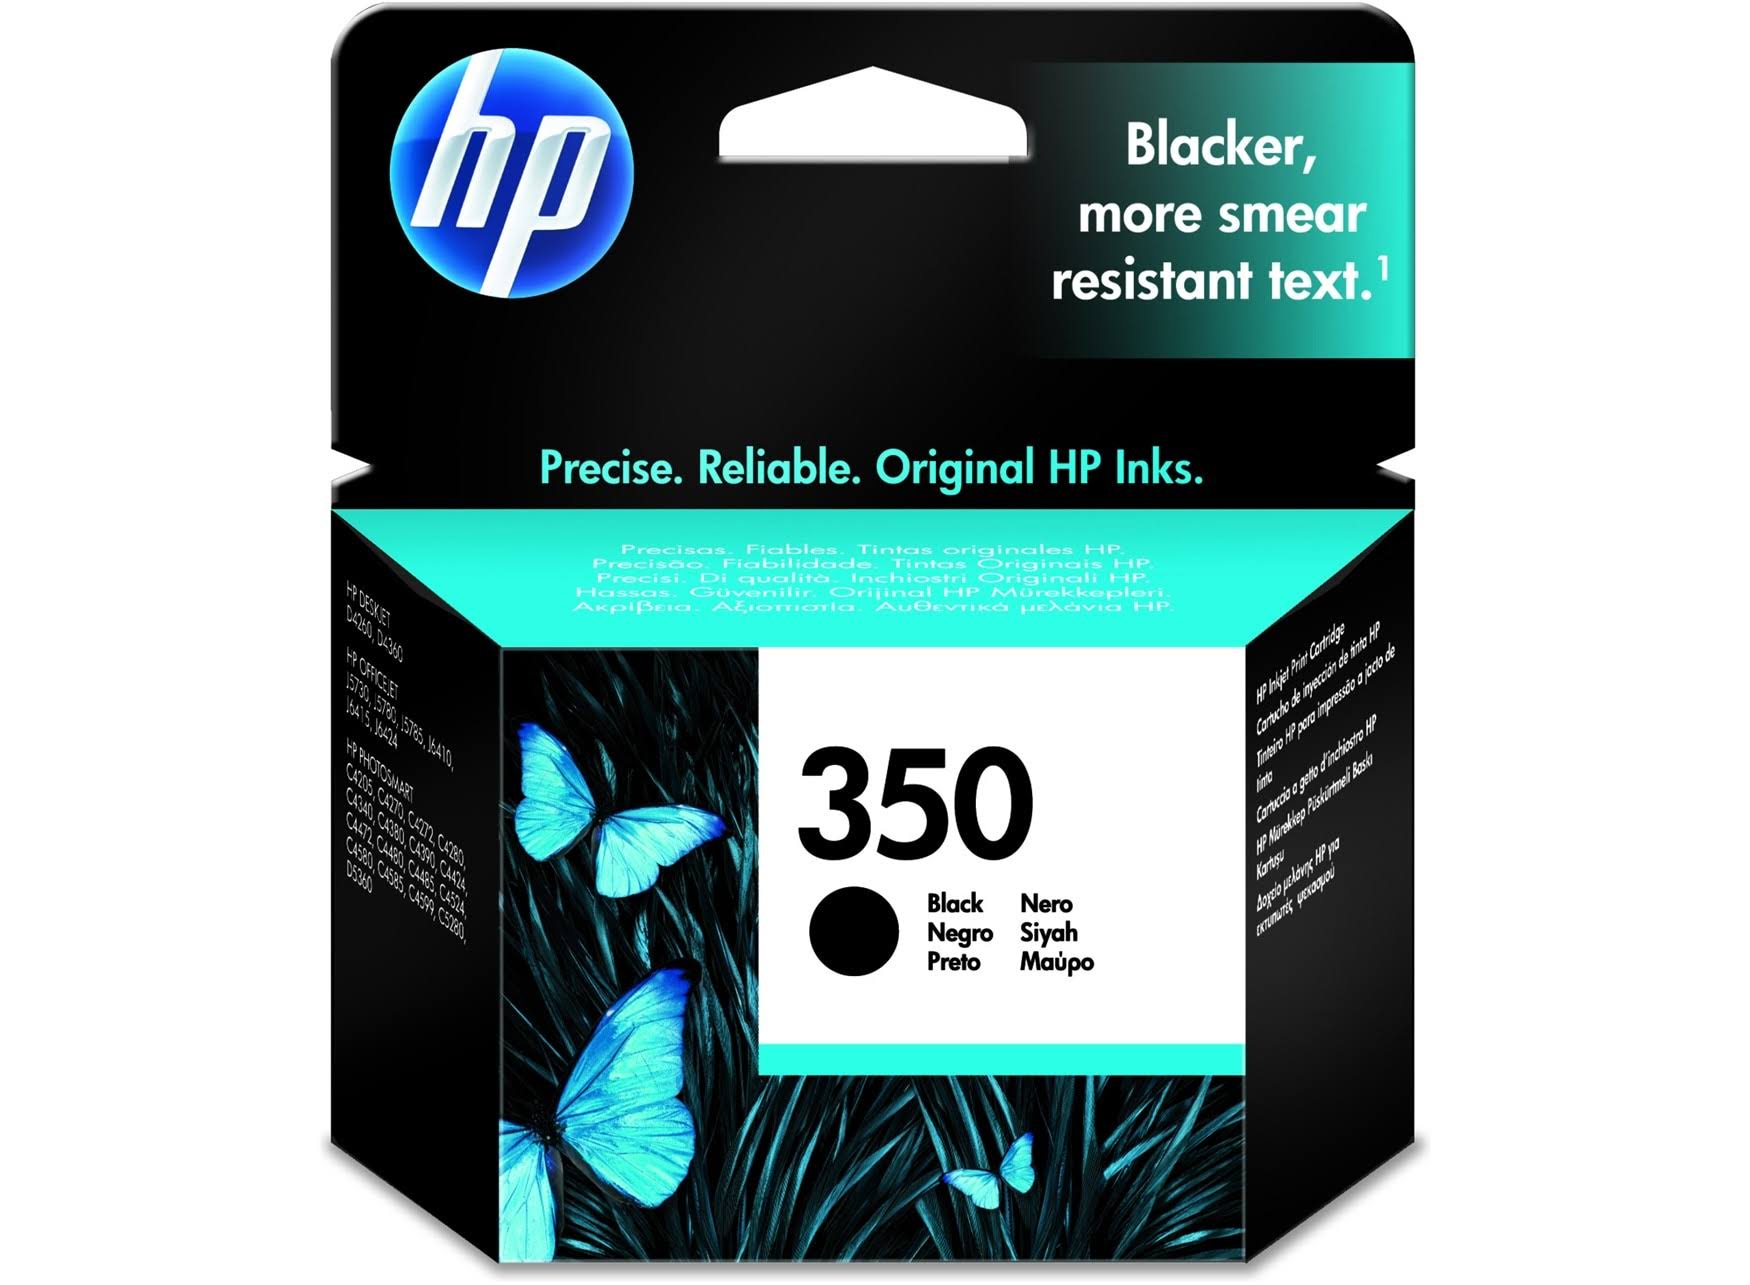 HP Printer Ink Cartridge - 350 Black